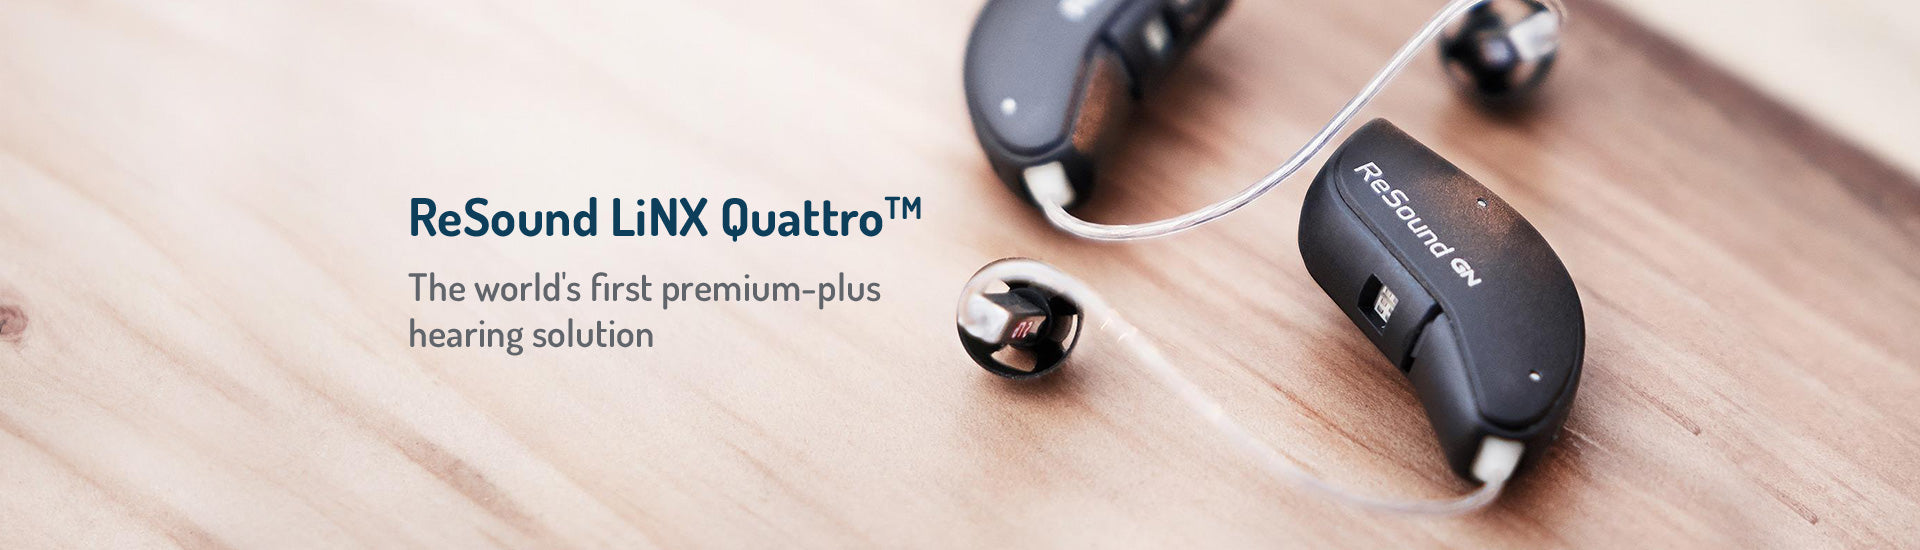 ReSoud Linx Quattro the world's first premium-plus hearing solution.